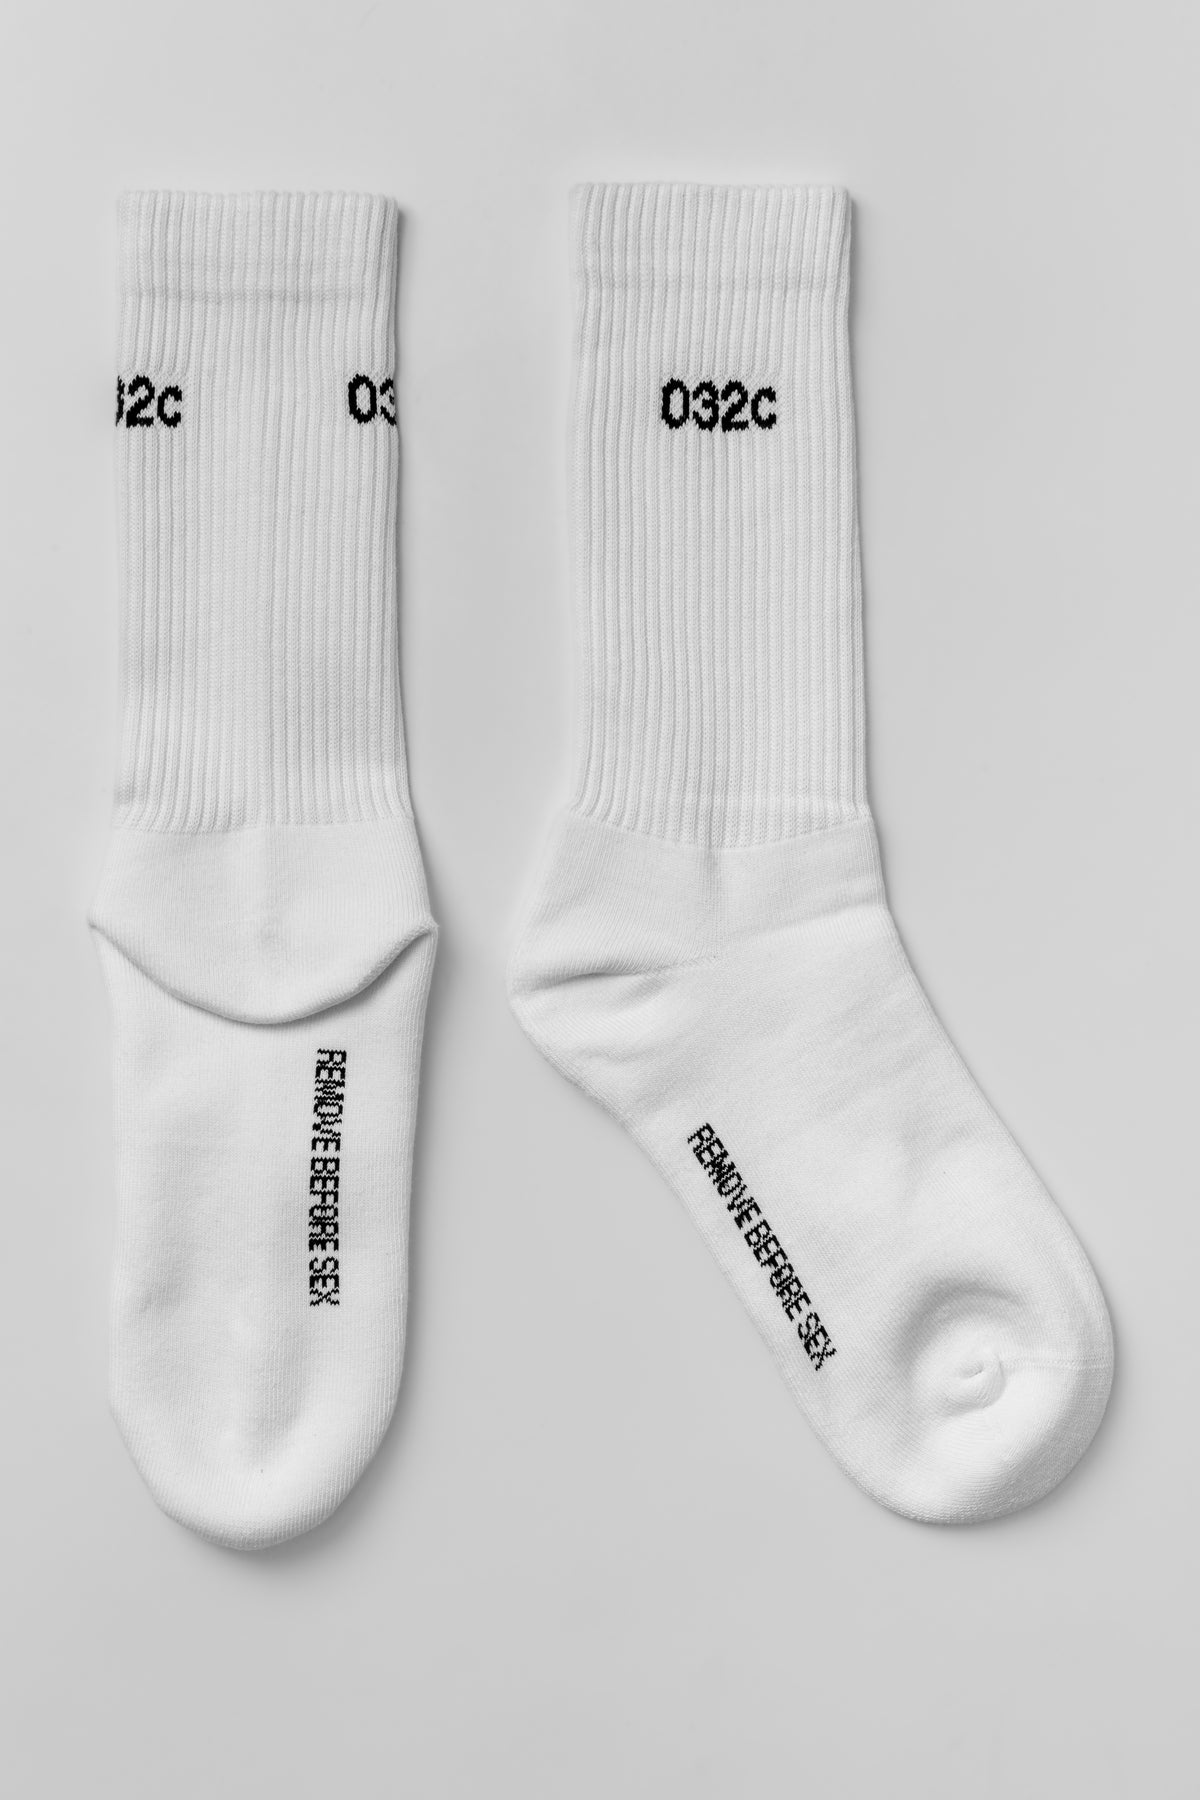 REMOVE BEFORE SEX Socks White/Black